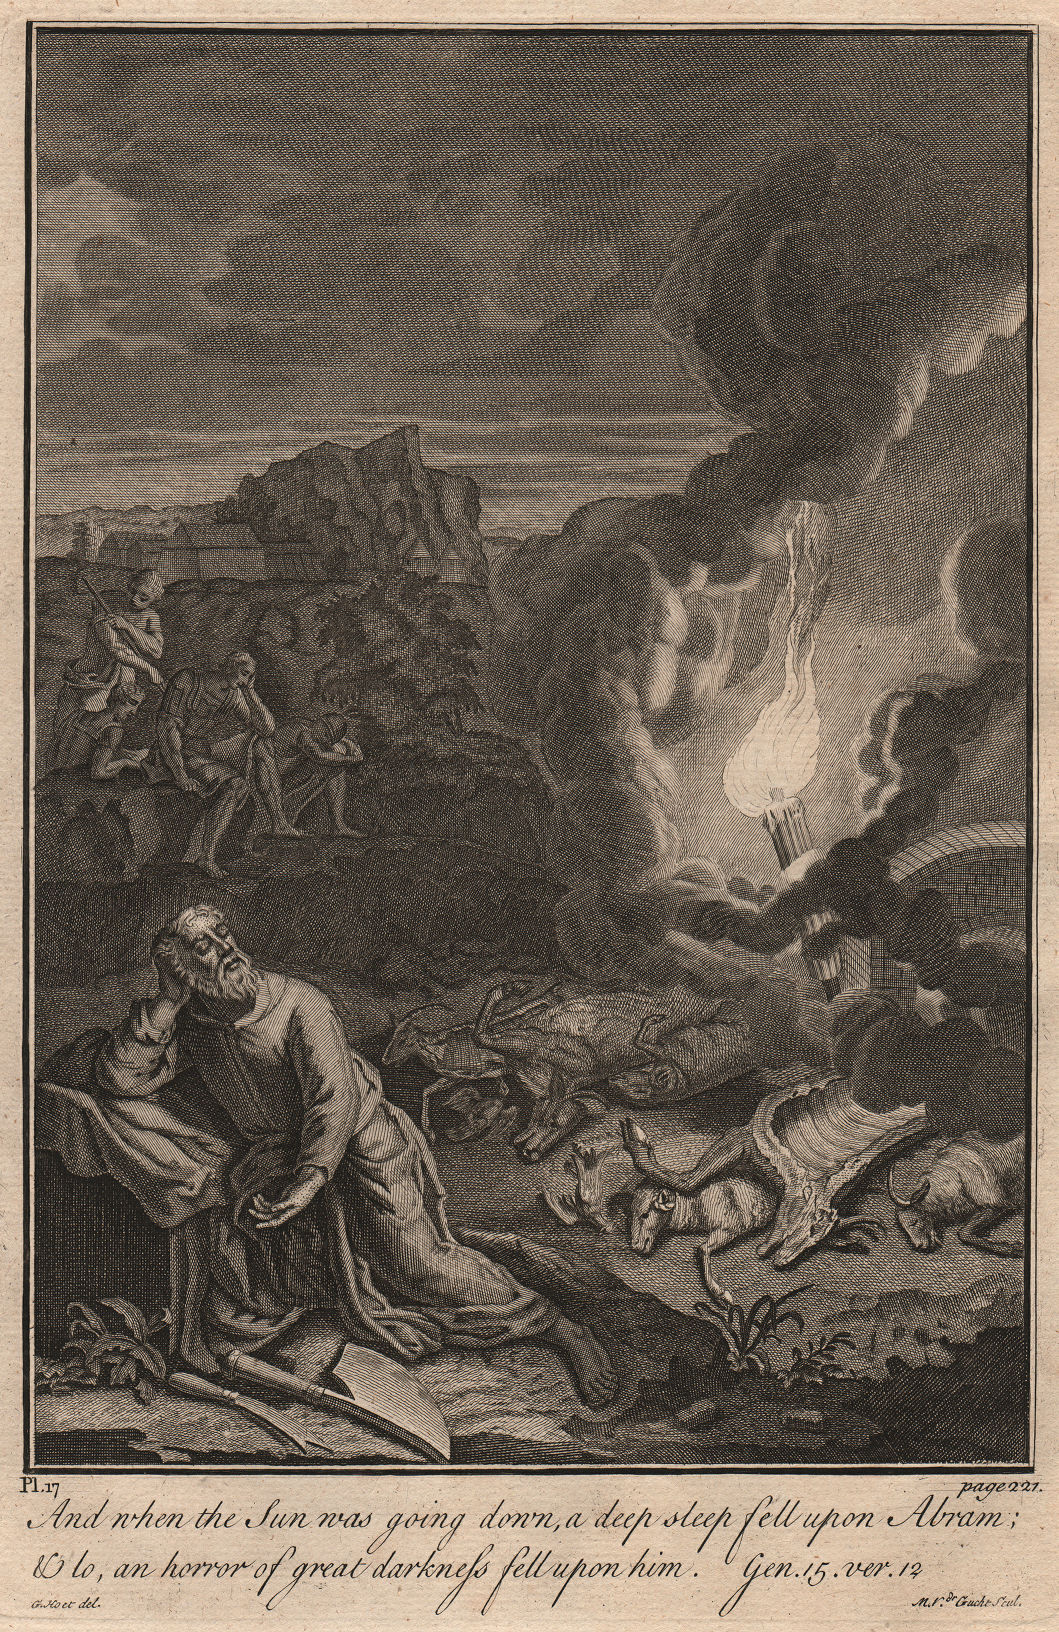 Associate Product BIBLE. Genesis 15.12 A deep sleep fell upon Abram 1752 old antique print